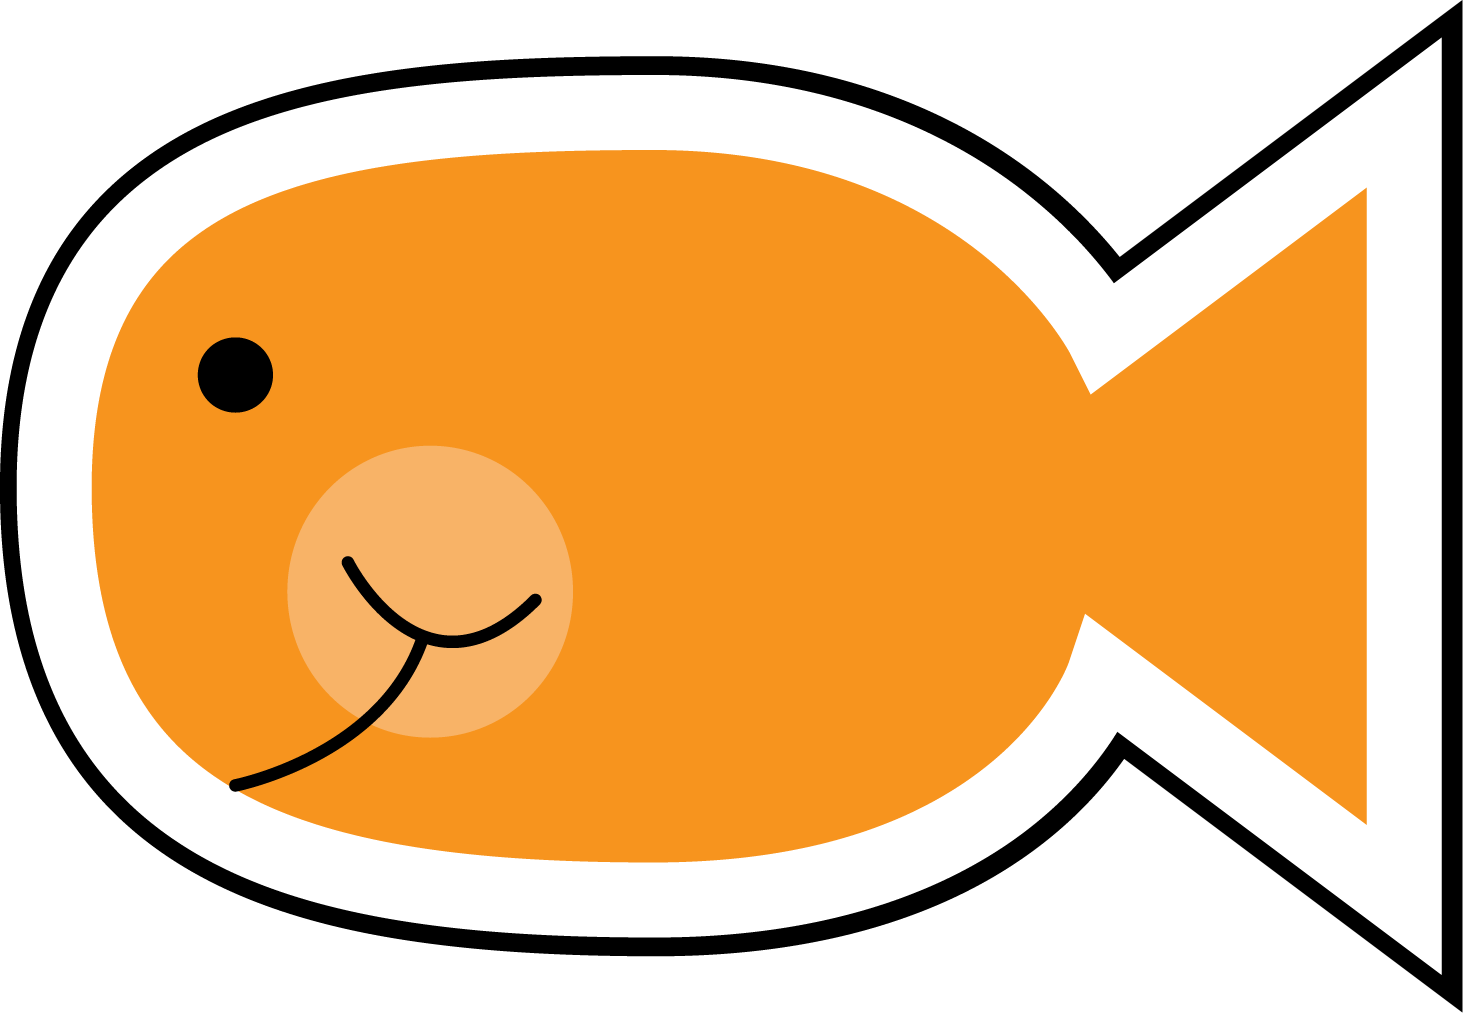 goldfish clipart - Goldfish Clip Art